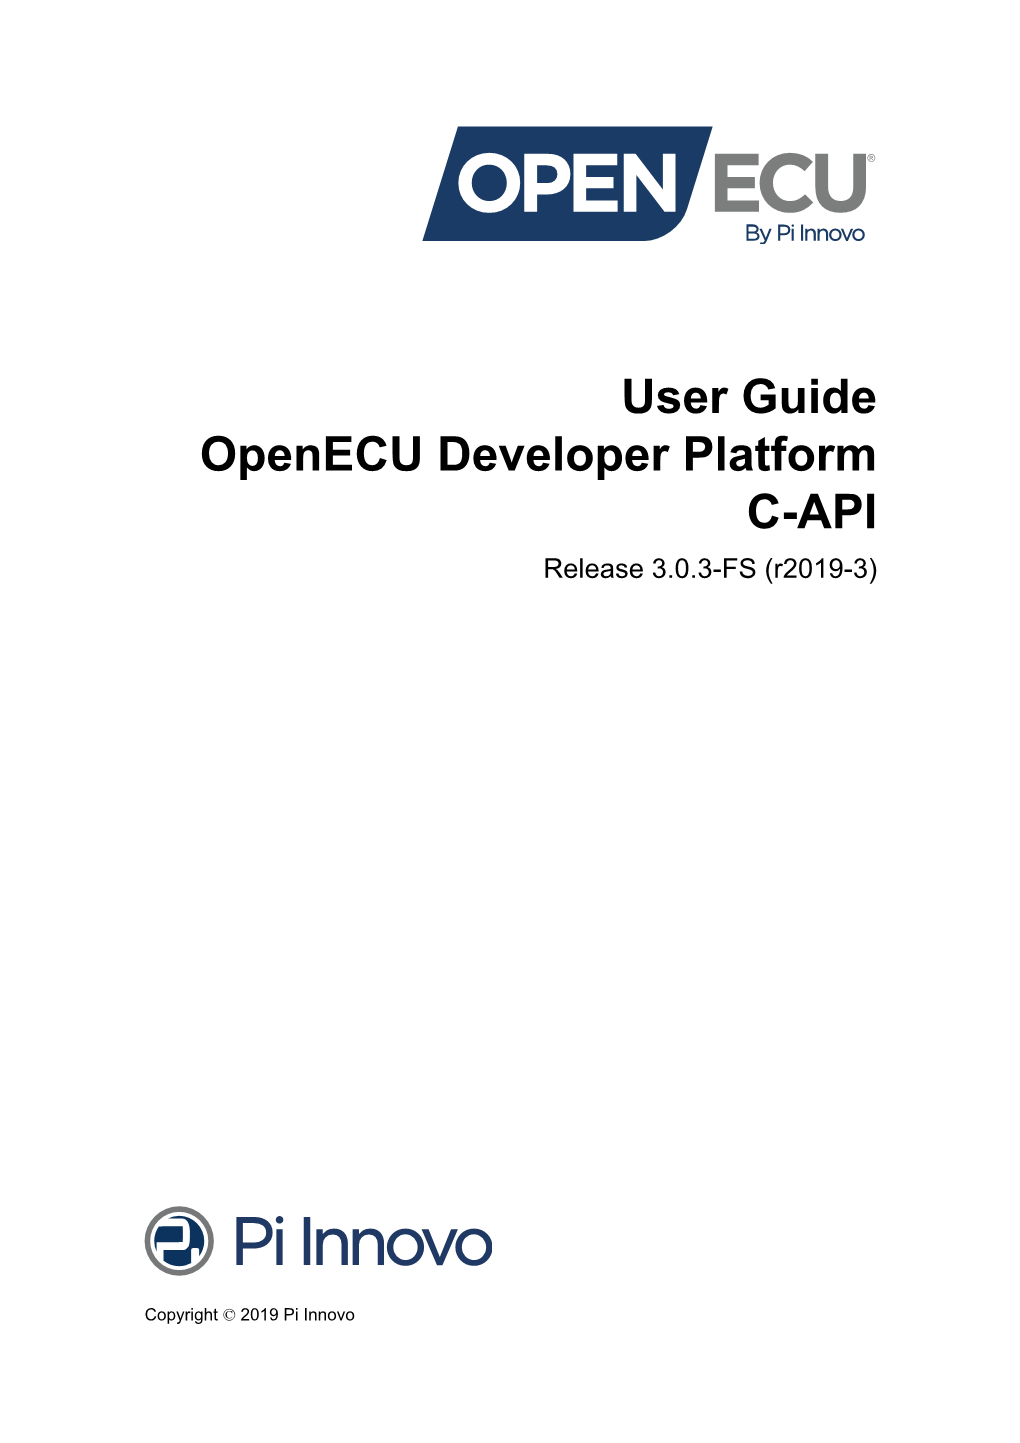 User Guide Openecu Developer Platform C-API Release 3.0.3-FS (R2019-3)